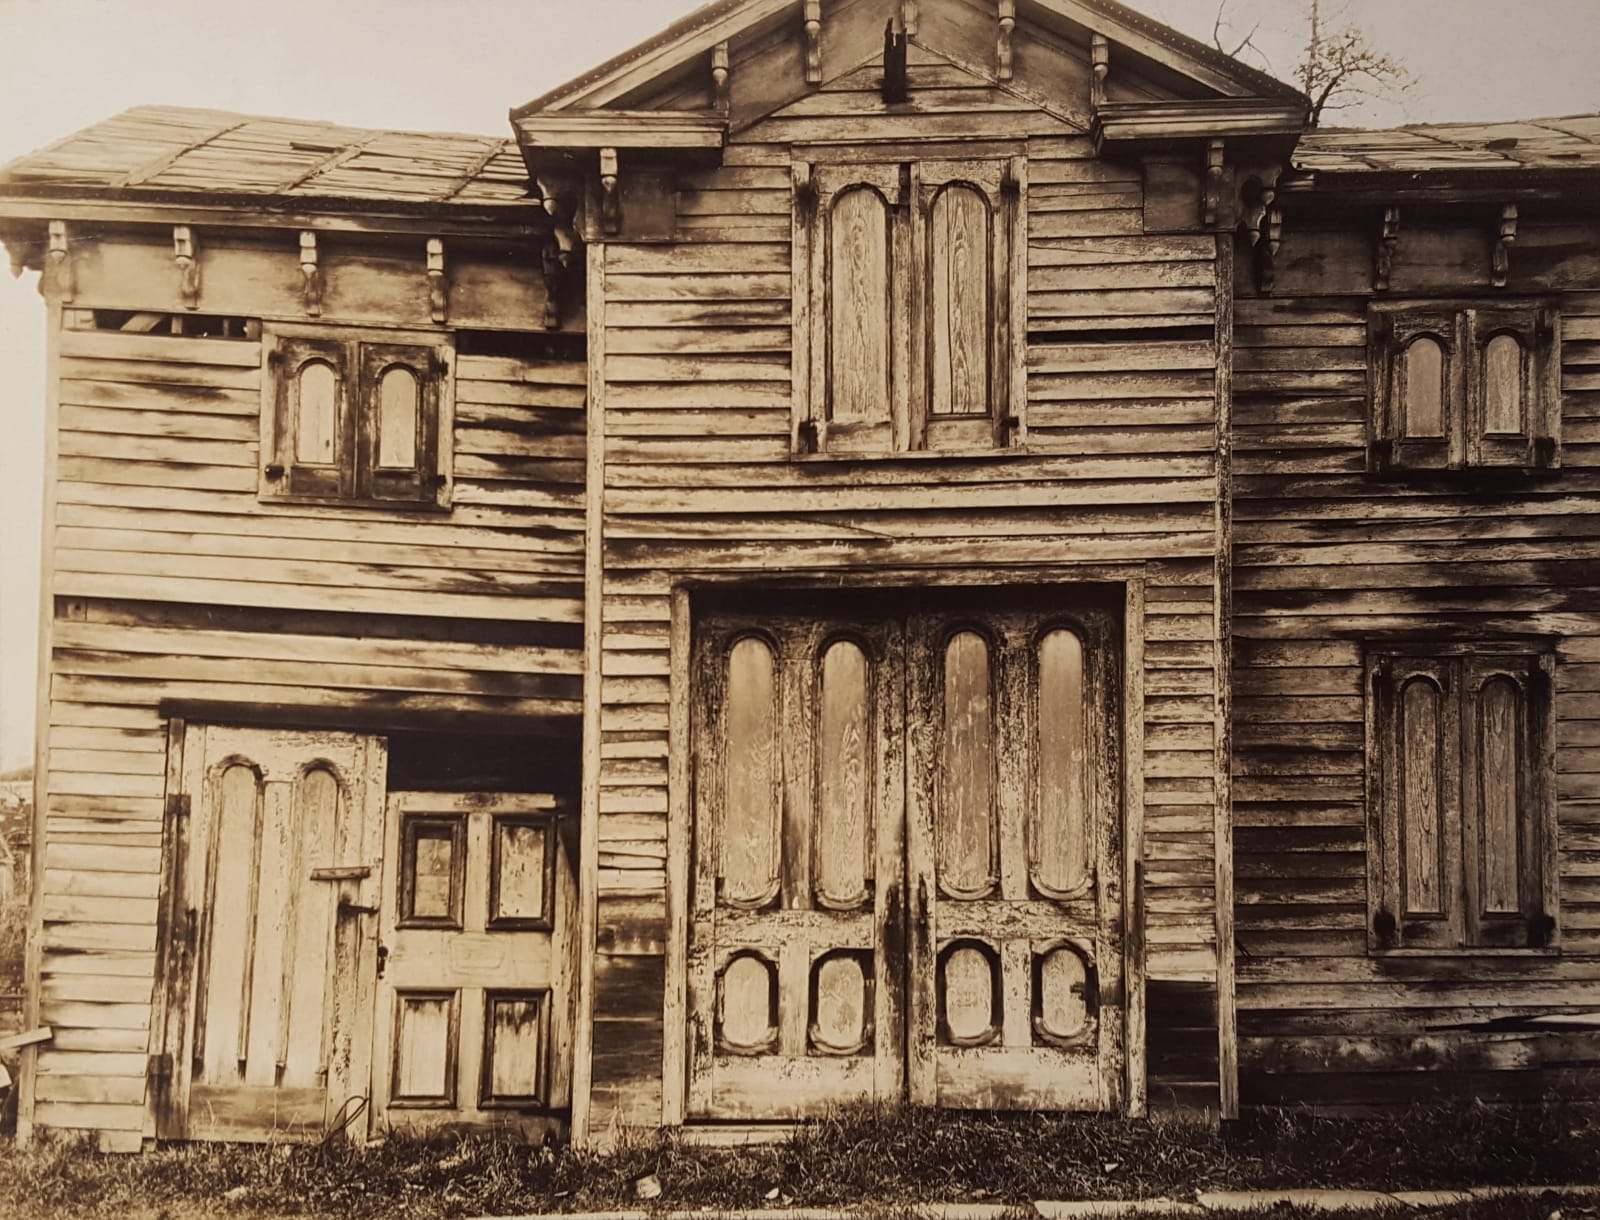 Walker Evans, Barn, Athens, New York [Dilapidated Italianate Revival Farmhouse], 1931 - 1933